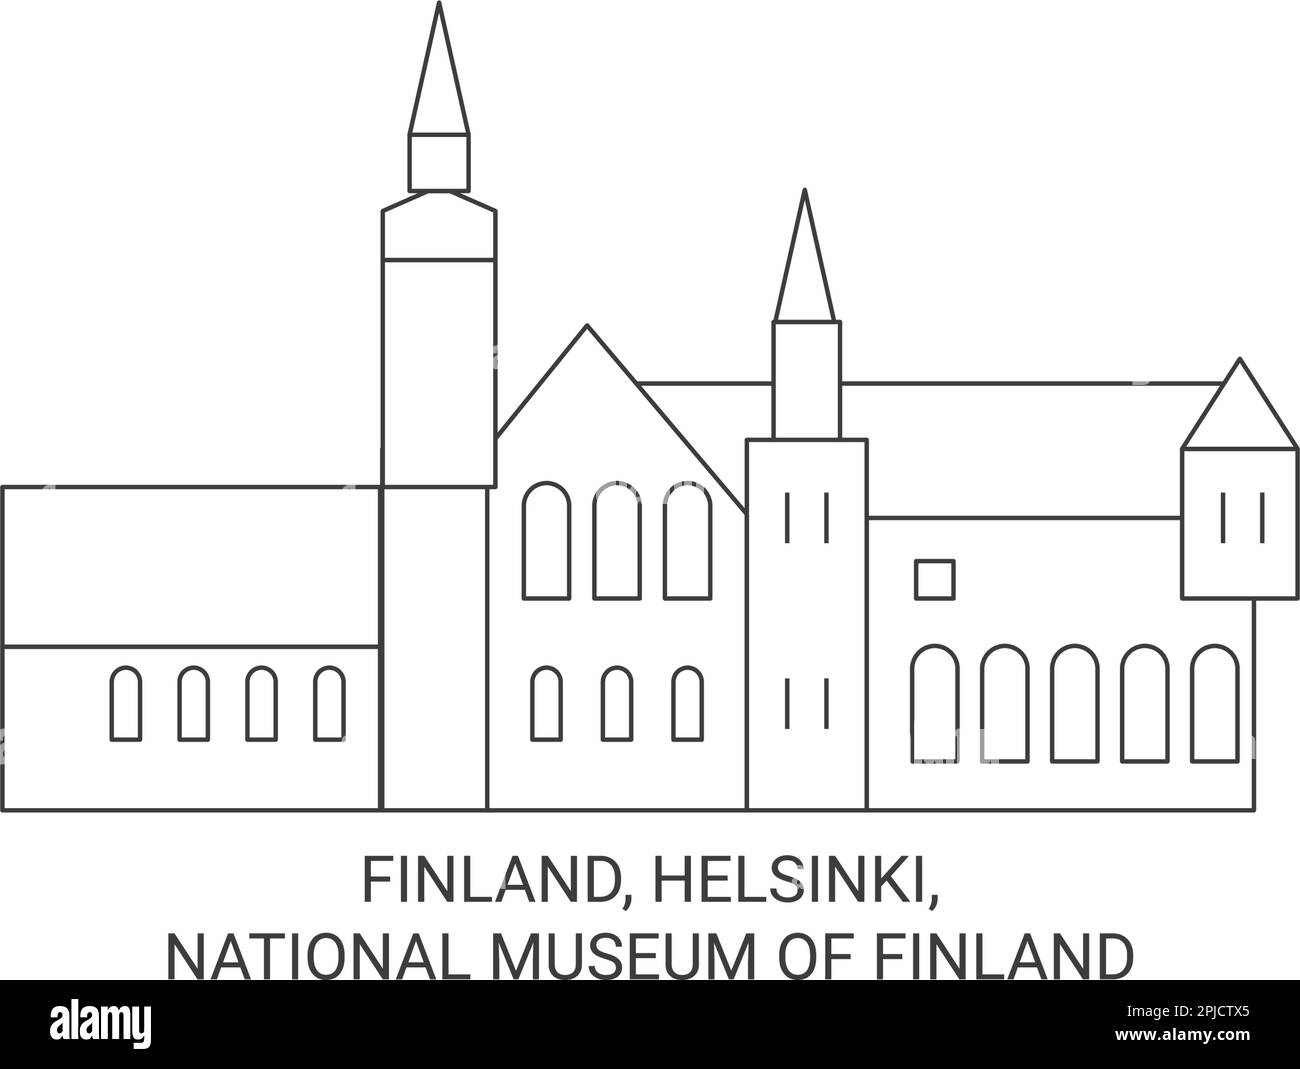 Finland, Helsinki, National Museum Of Finland travel landmark vector illustration Stock Vector